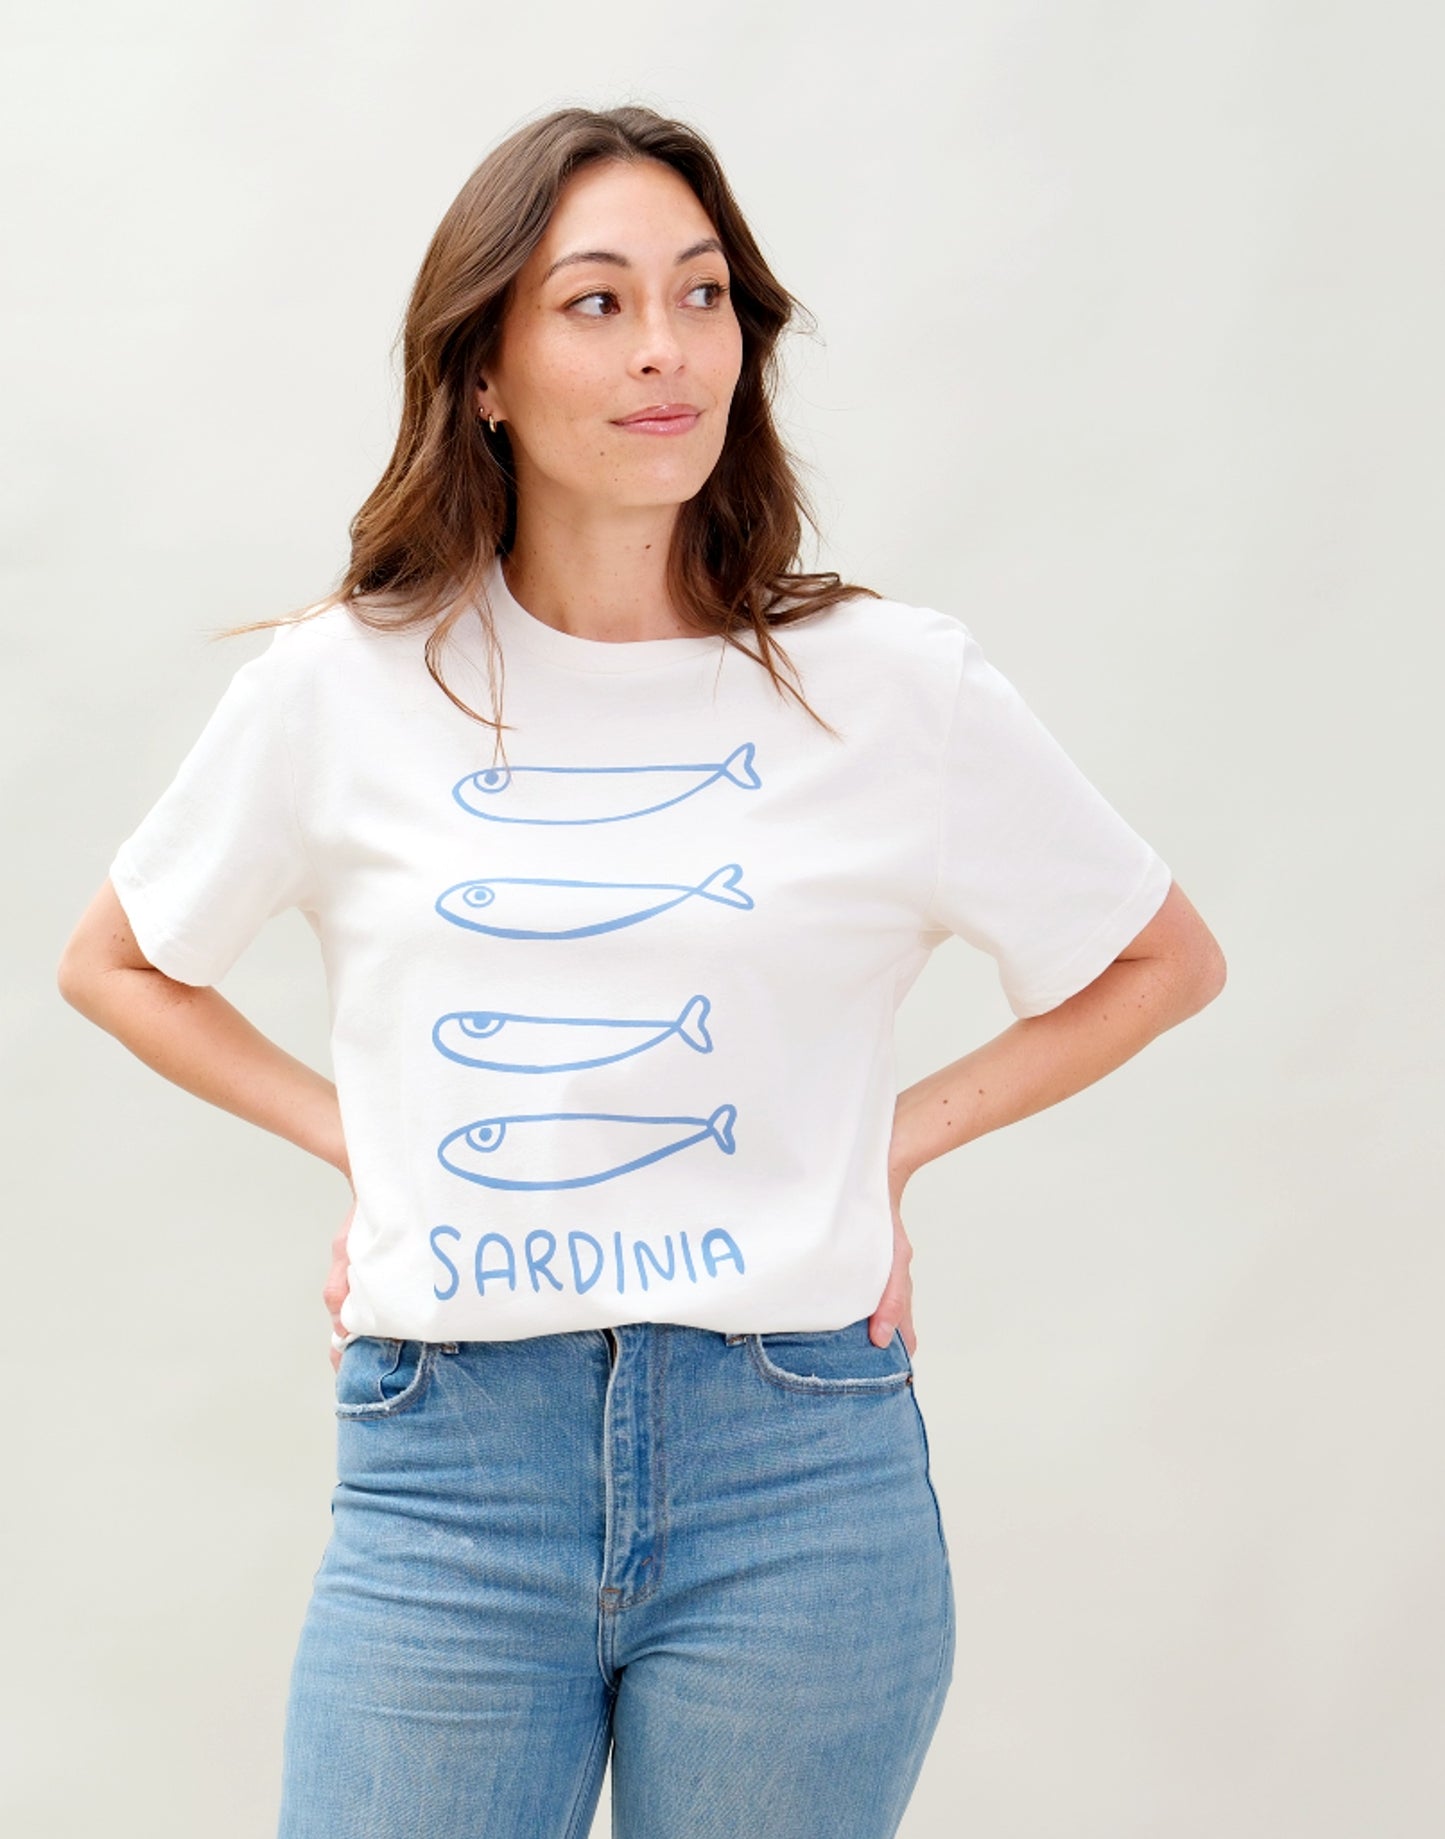 Sardines from Sardinia T-Shirt